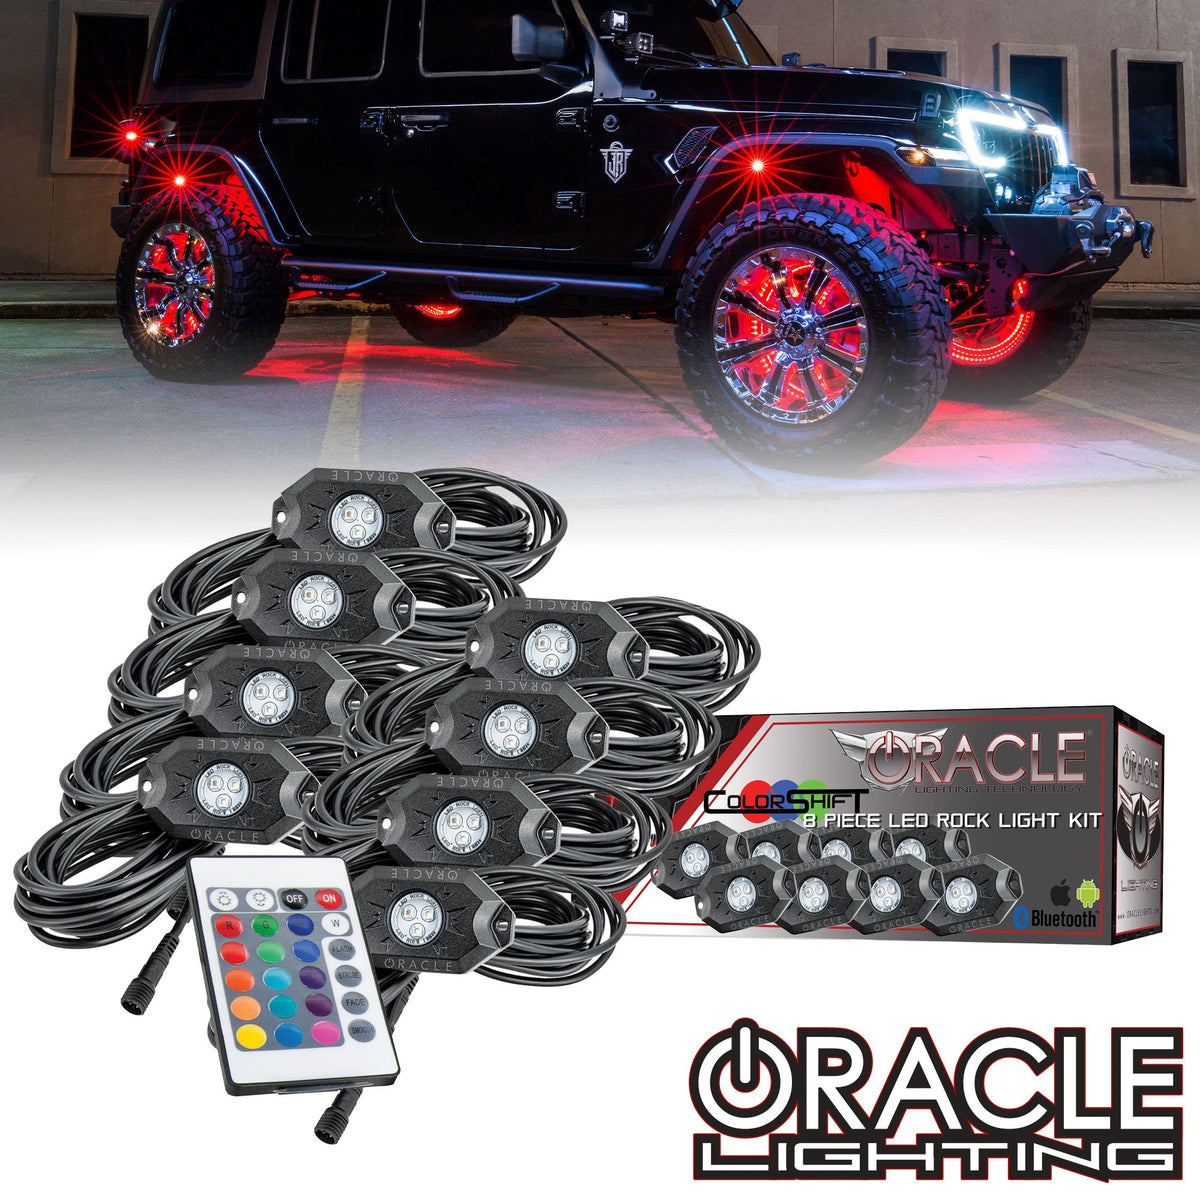 ColorSHIFT Underbody RGB Rock Light Kit | ORACLE Lighting